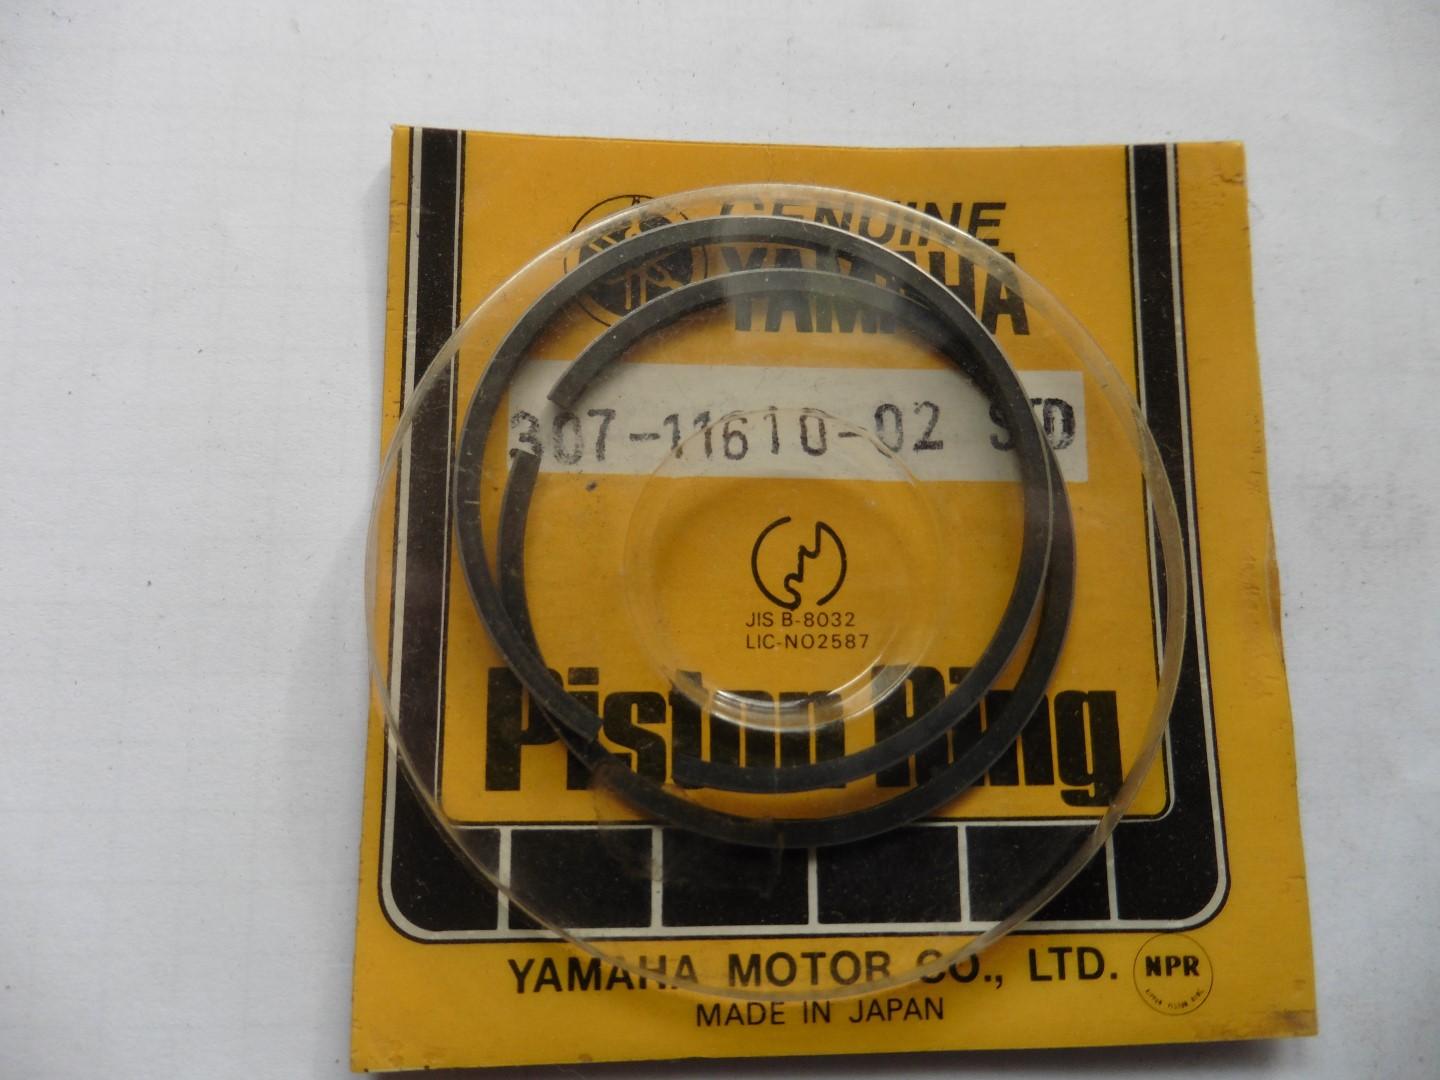 Kolbenringe Kolbenringset Standard piston rings kit für Yamaha Rd 125 1973 307-11610